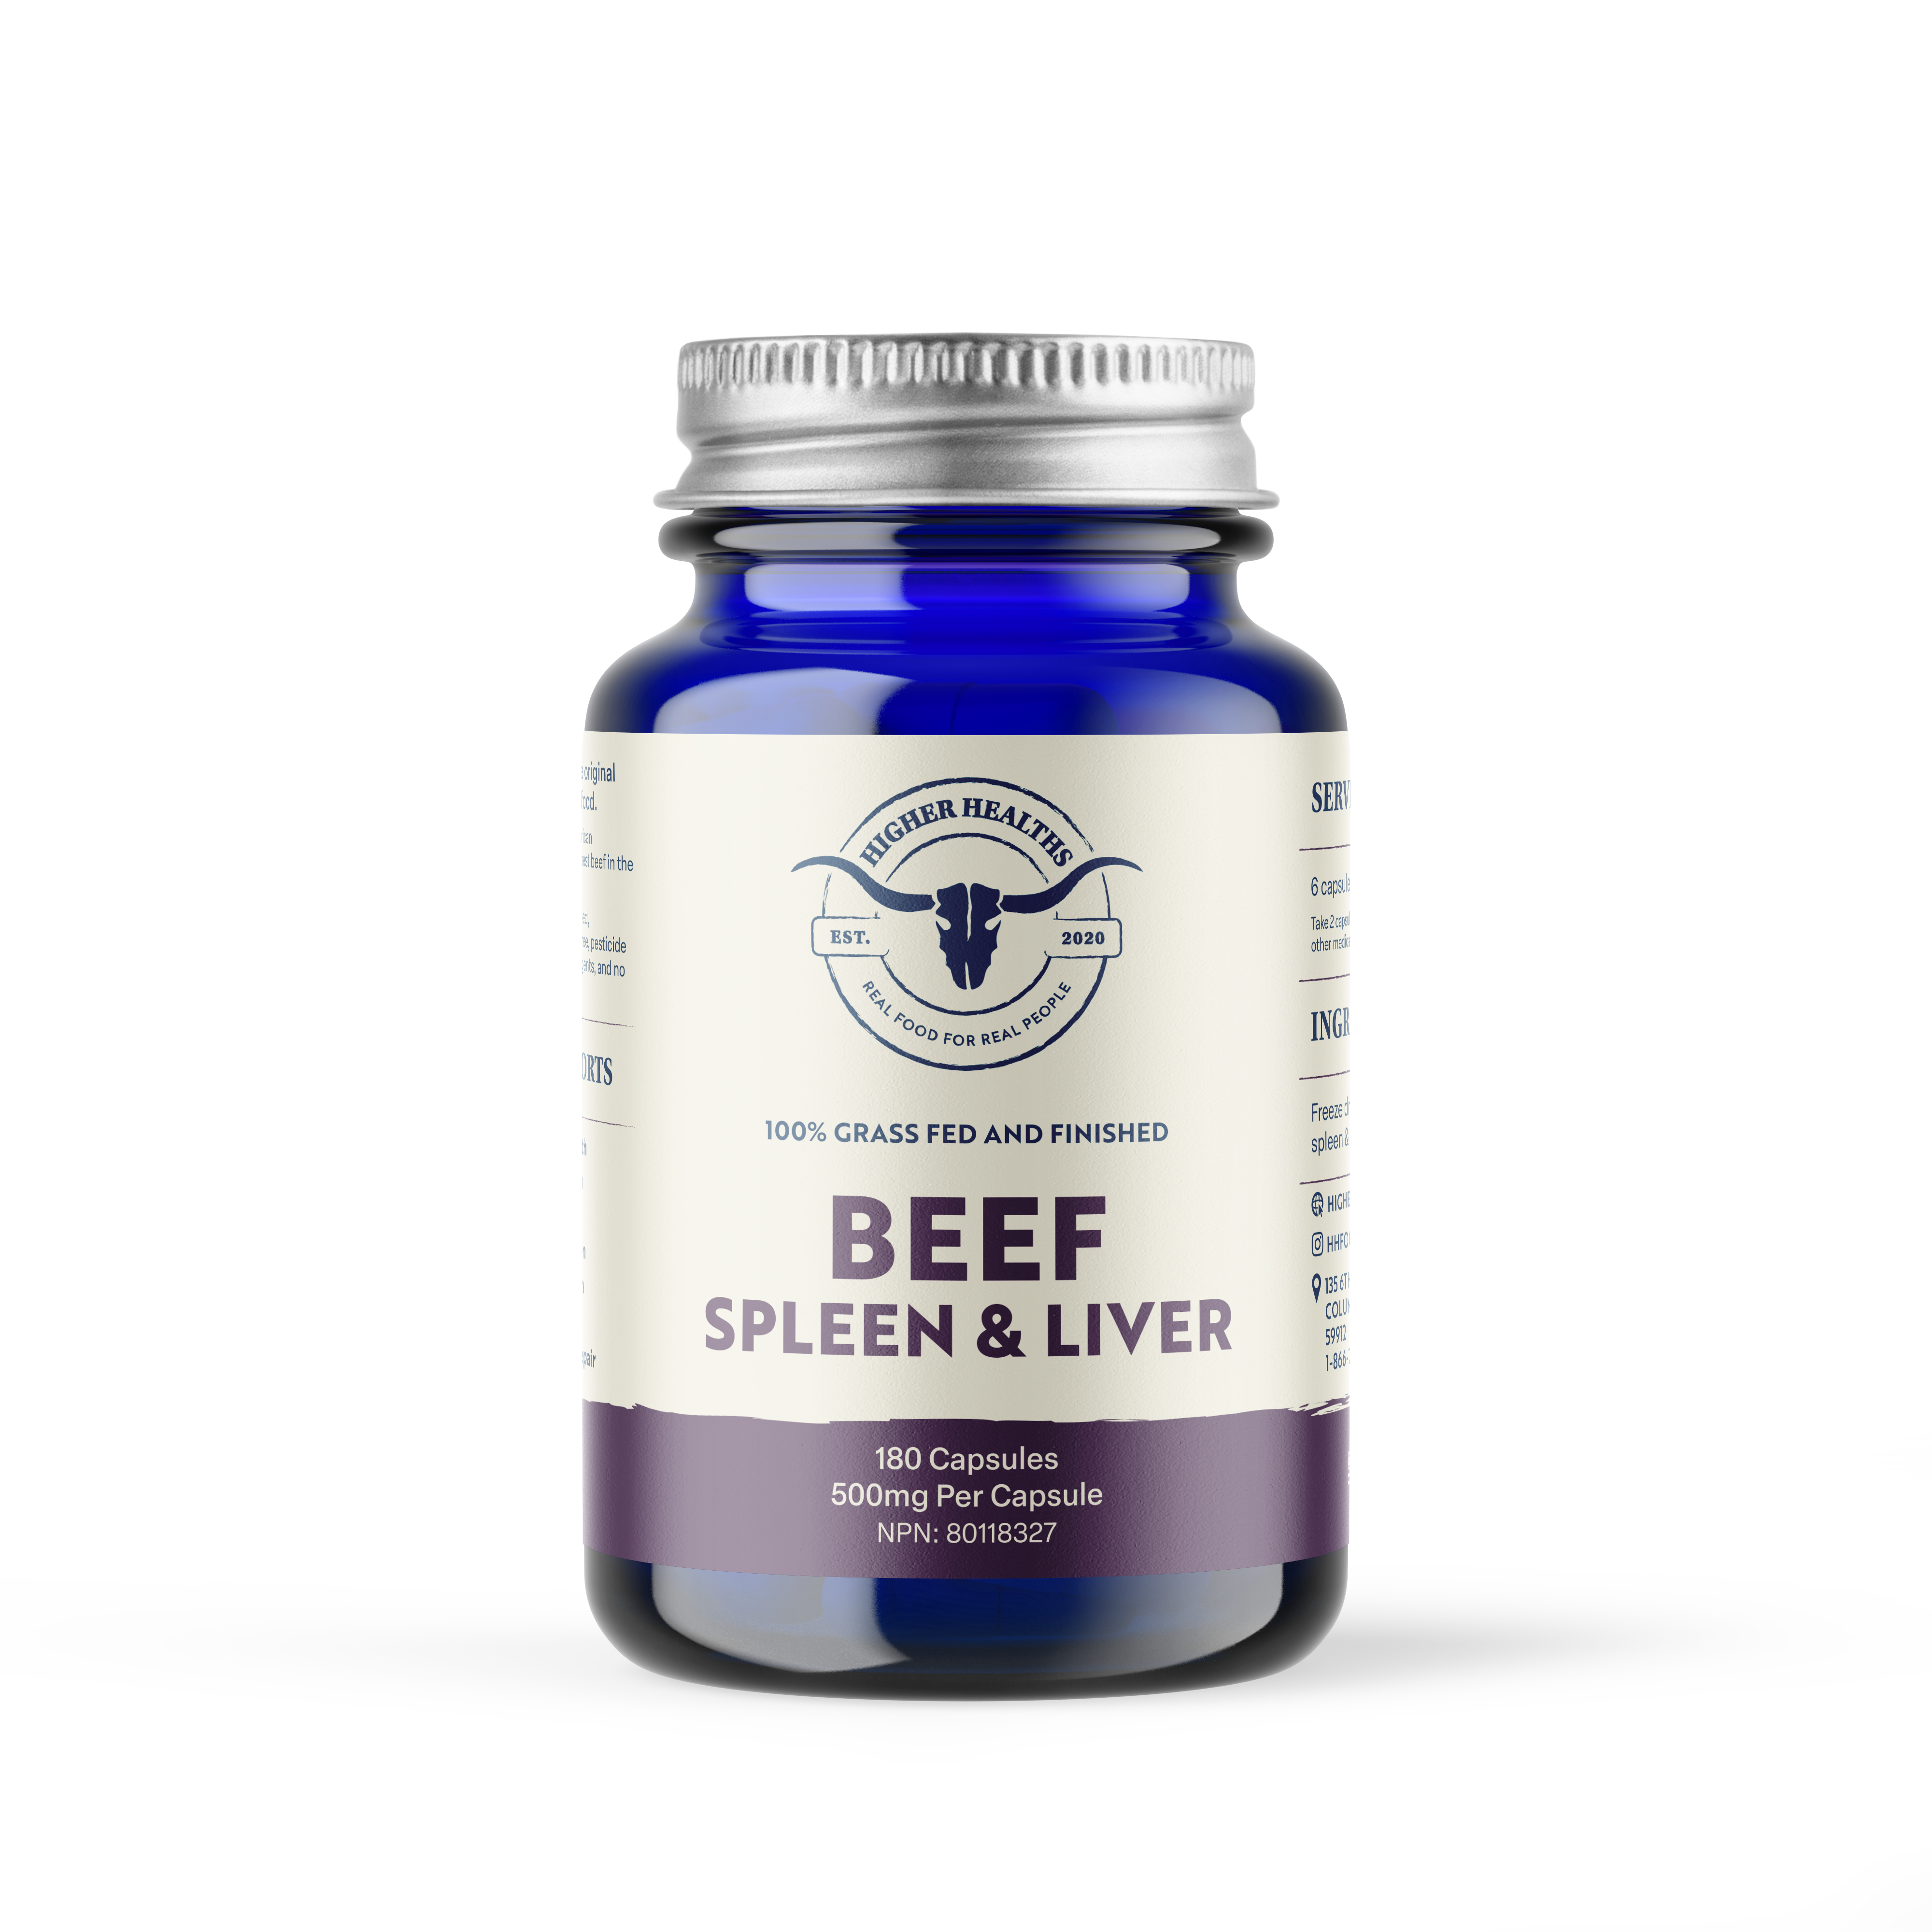 Beef Spleen & Liver - Realfoods are Superfoods